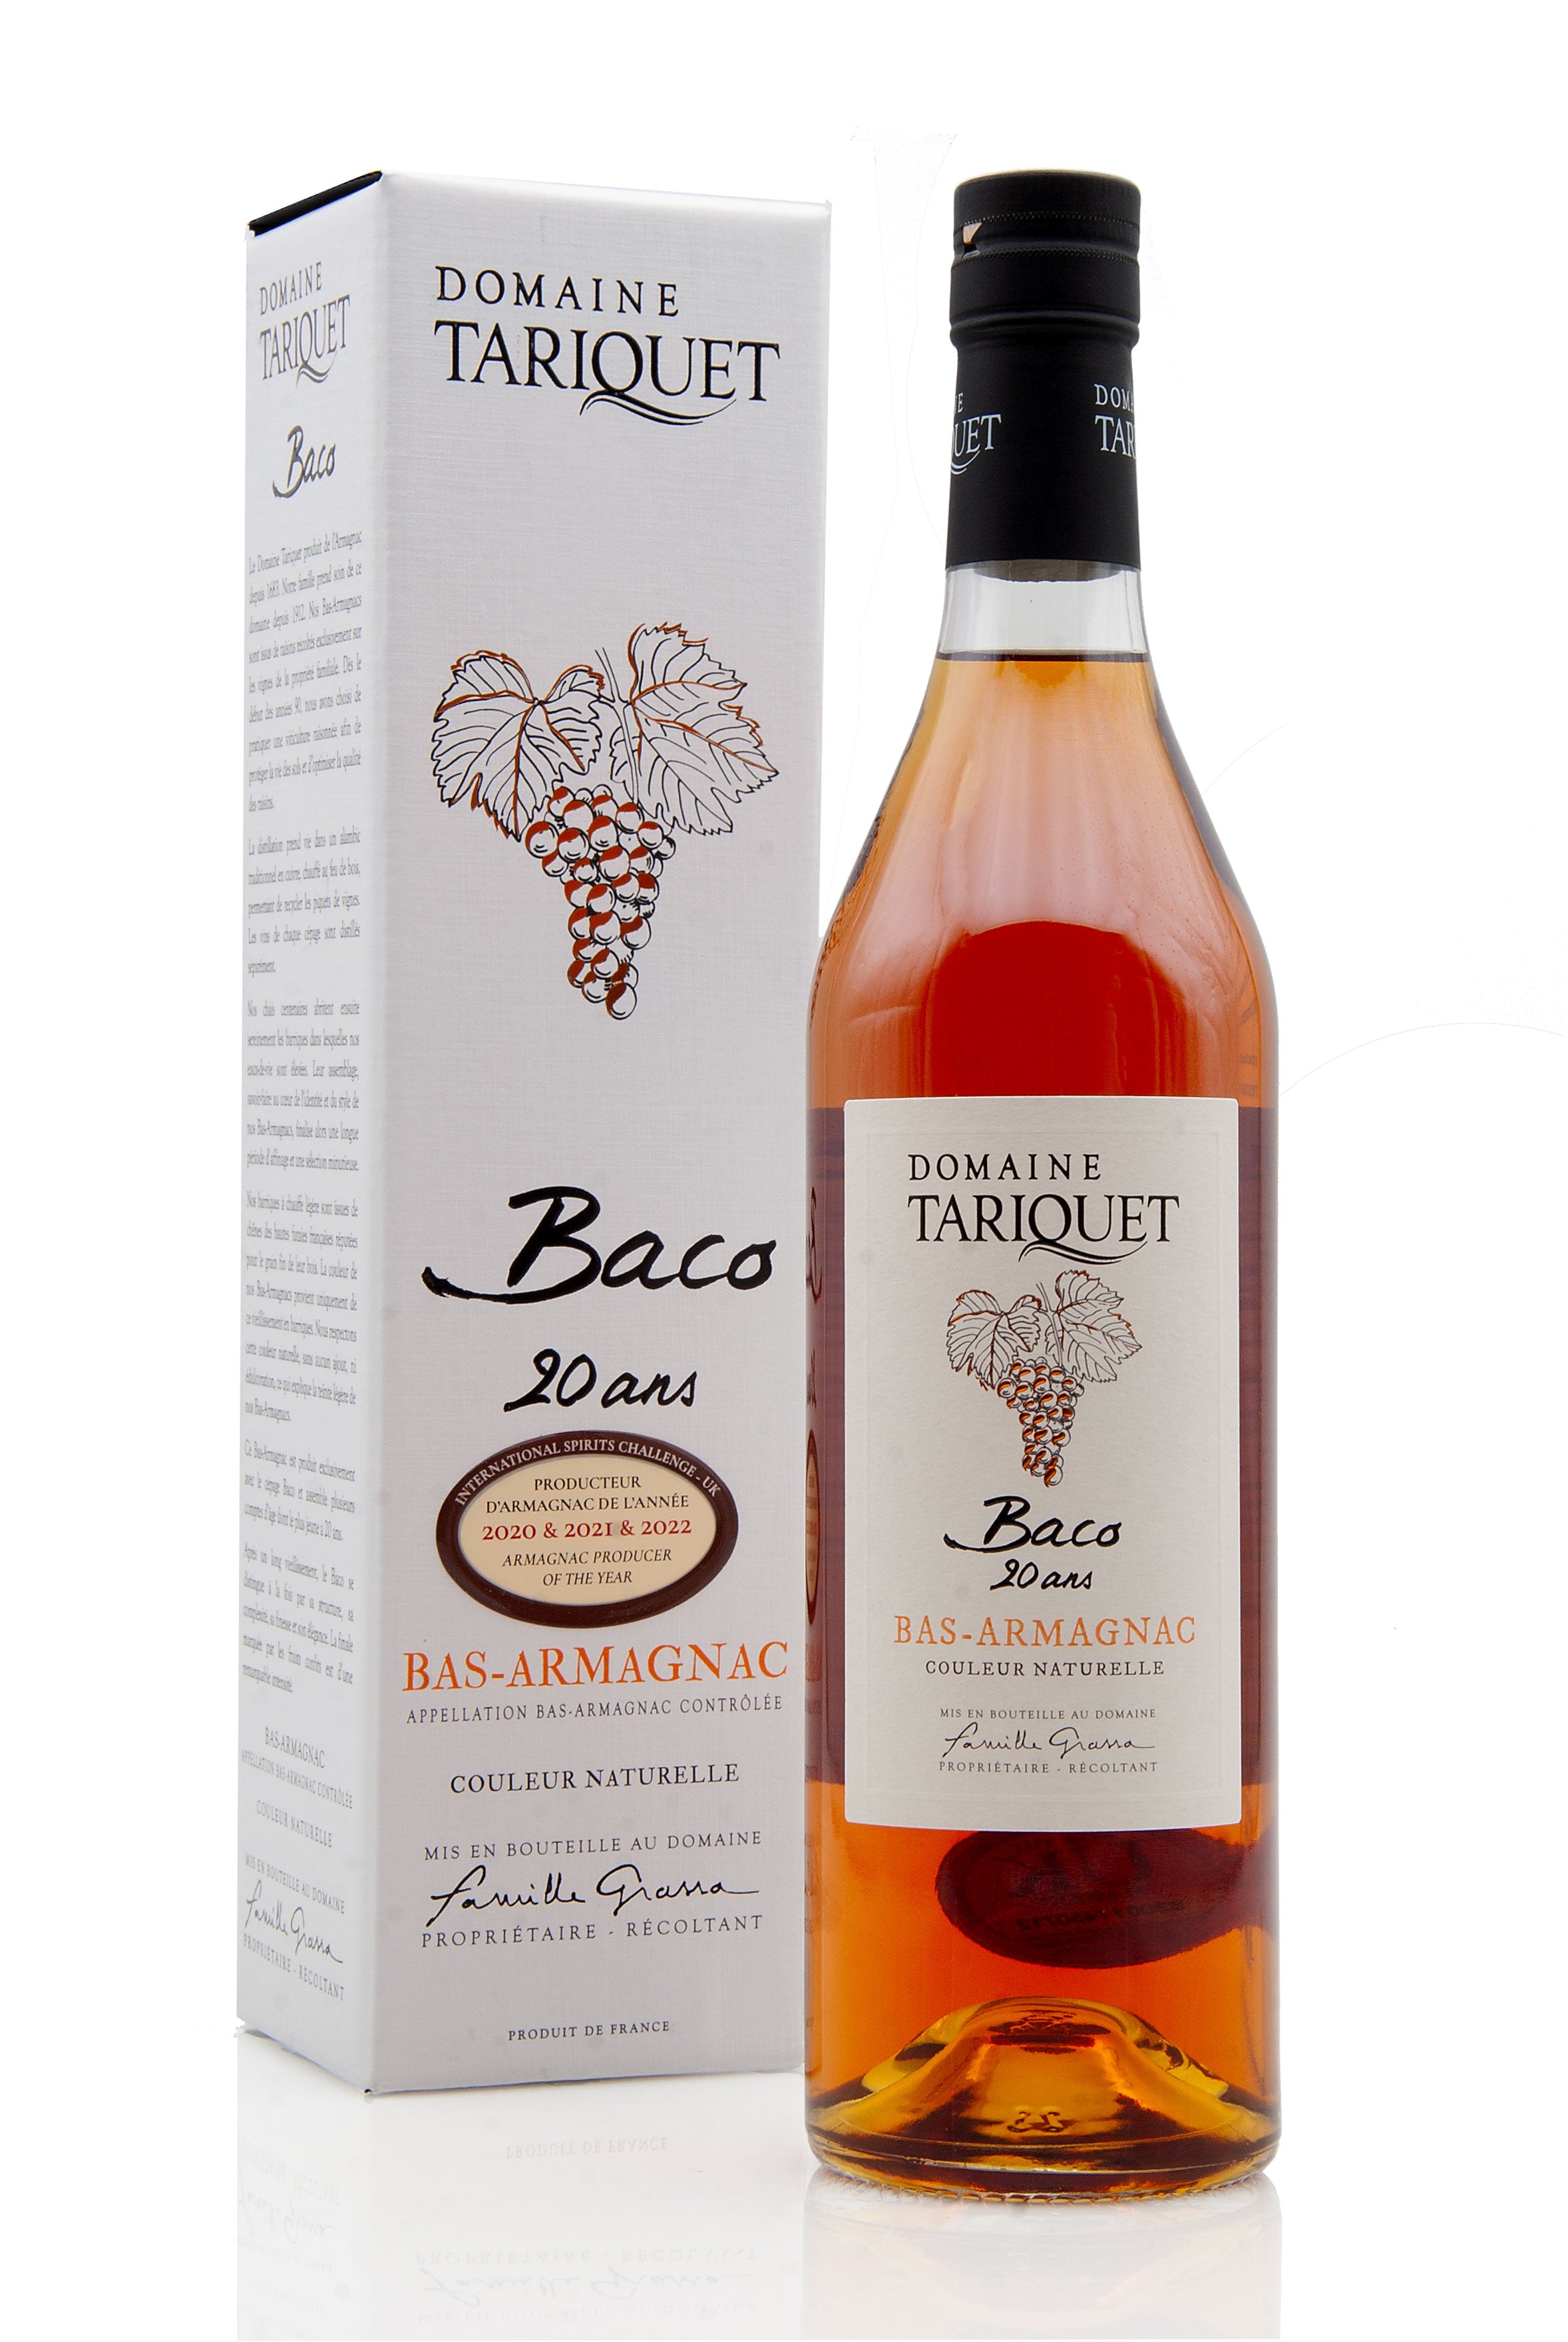 Domaine Tariquet 20 Year Old Bas-Armagnac Baco | Abbey Whisky